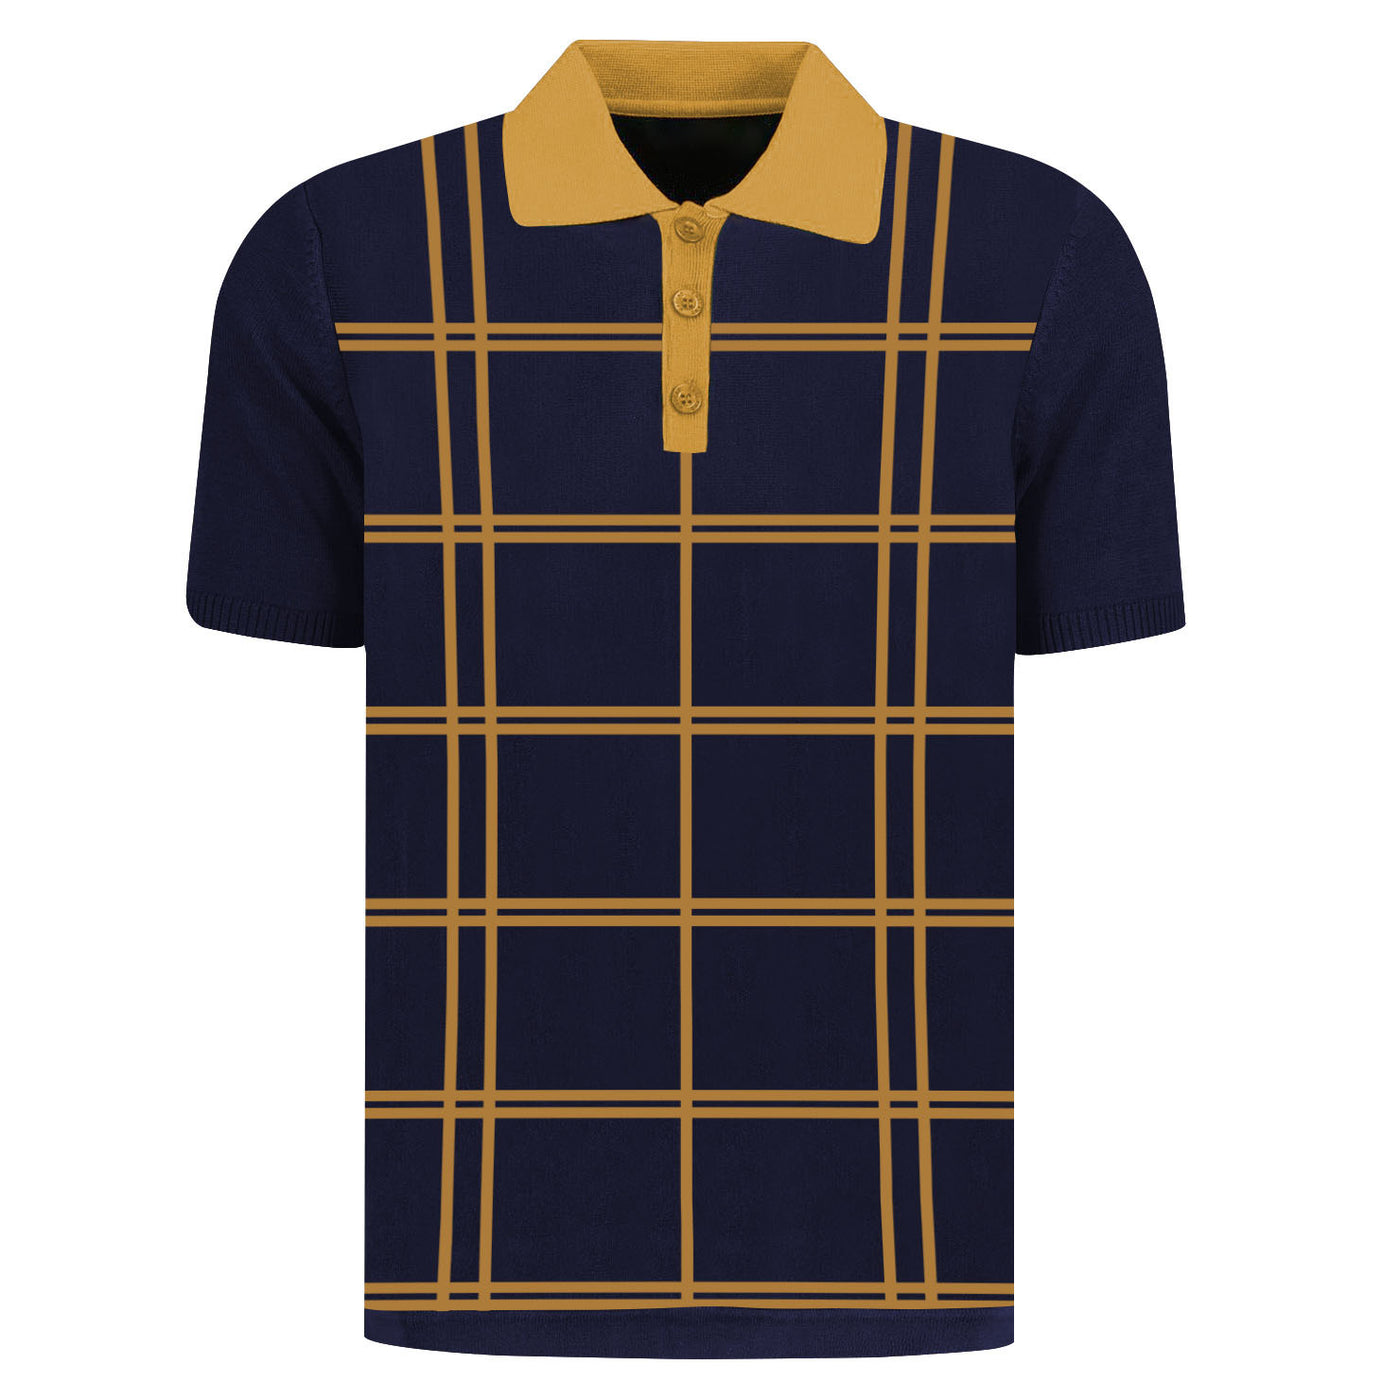 Men's navy blue 1950s vintage polo shirt